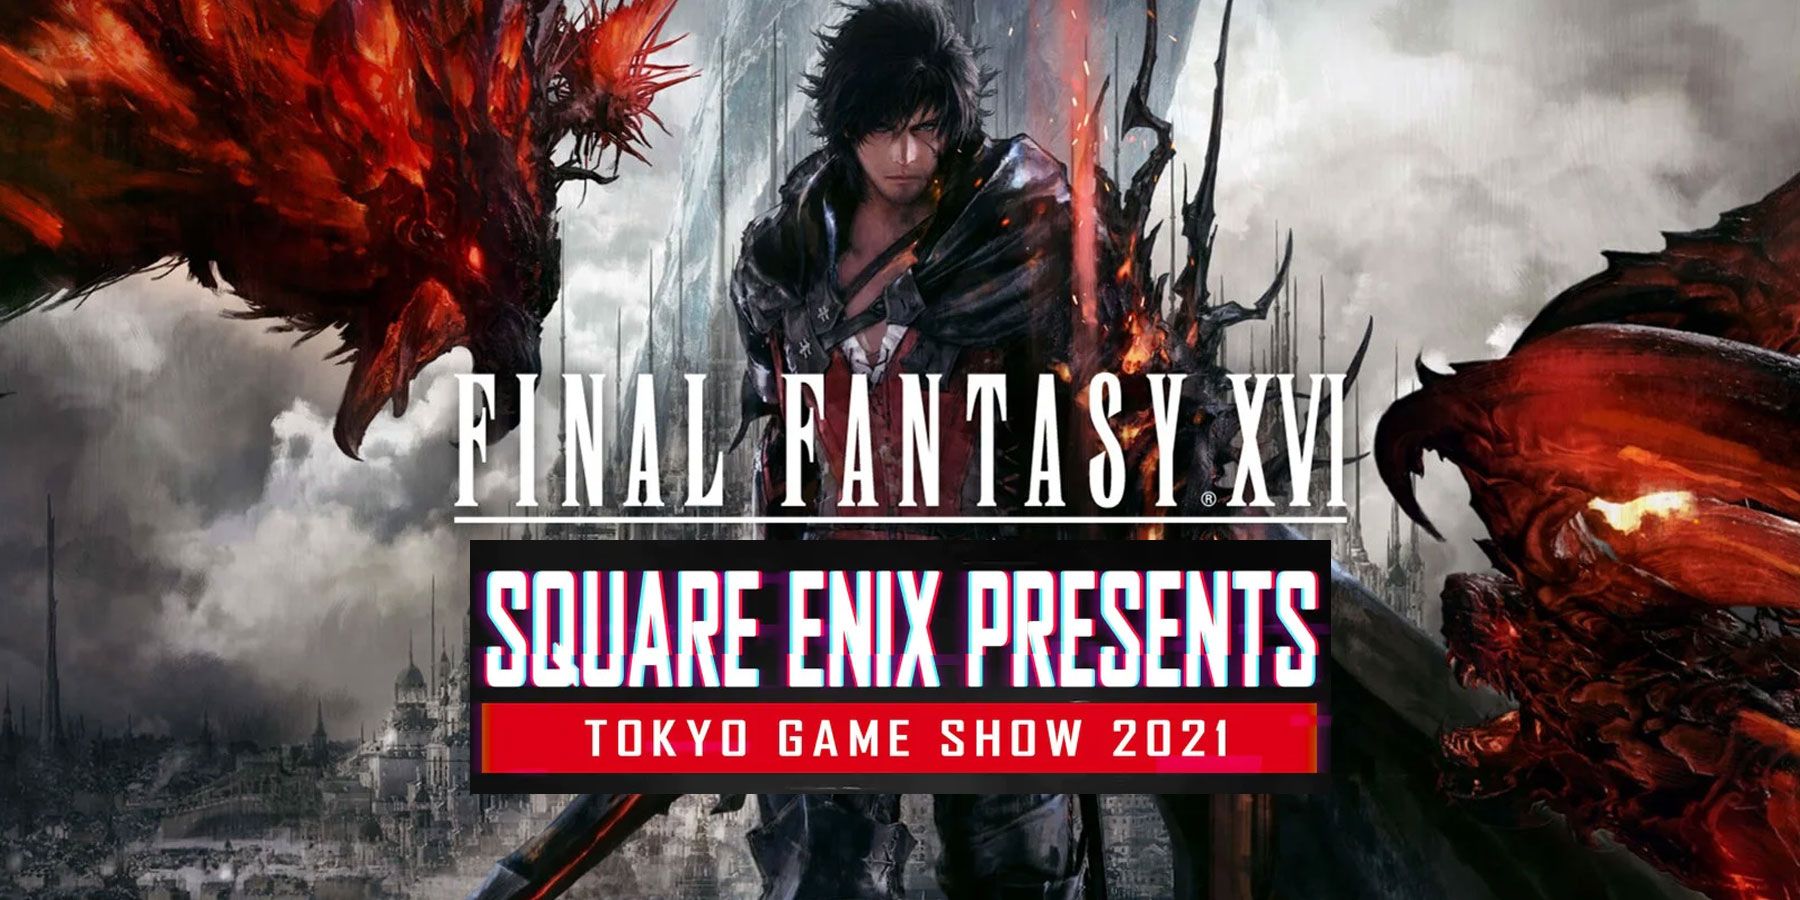 Square Enix Tokyo Game Show 2021 Schedule에서 결석 16 결석 16